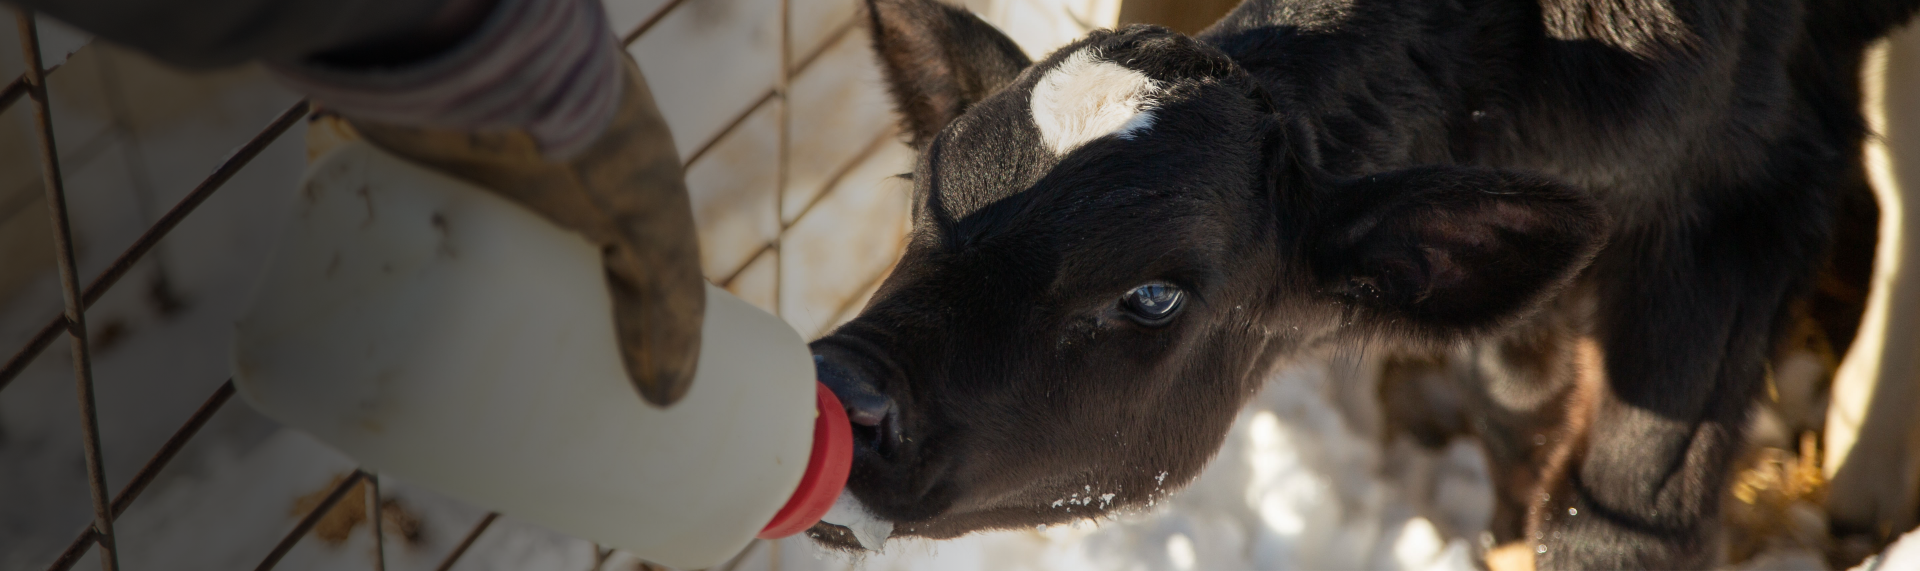 Cattle - Reproduction | Merck Animal Health USA